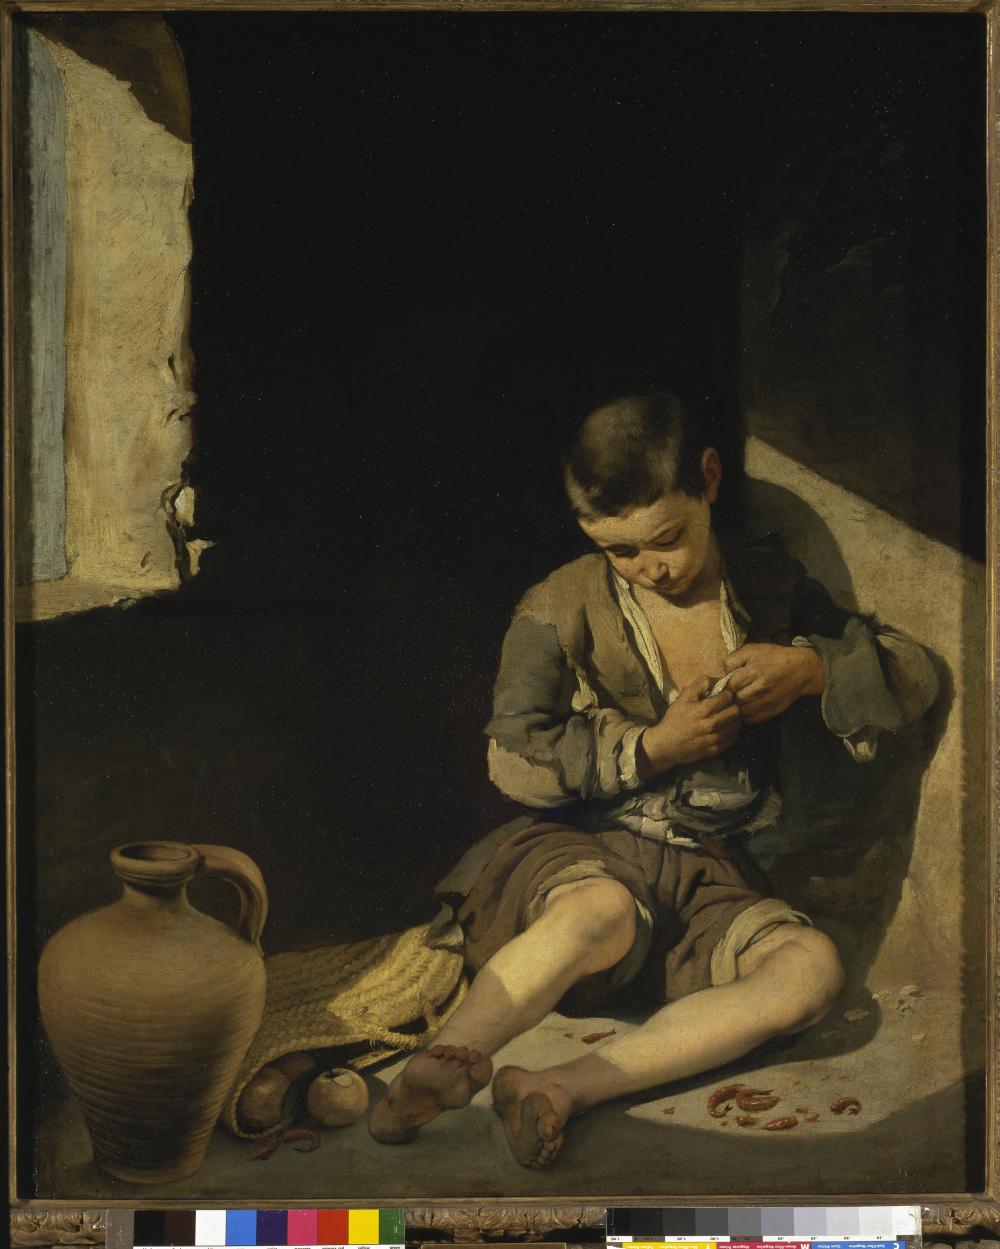 Bartolomé Esteban Murillo (Seville, 1618 - Seville, 1682) The Young Beggar (around 1645-1650) Oil on canvas, 134 x 110 cm, Louvre Museum, Paris